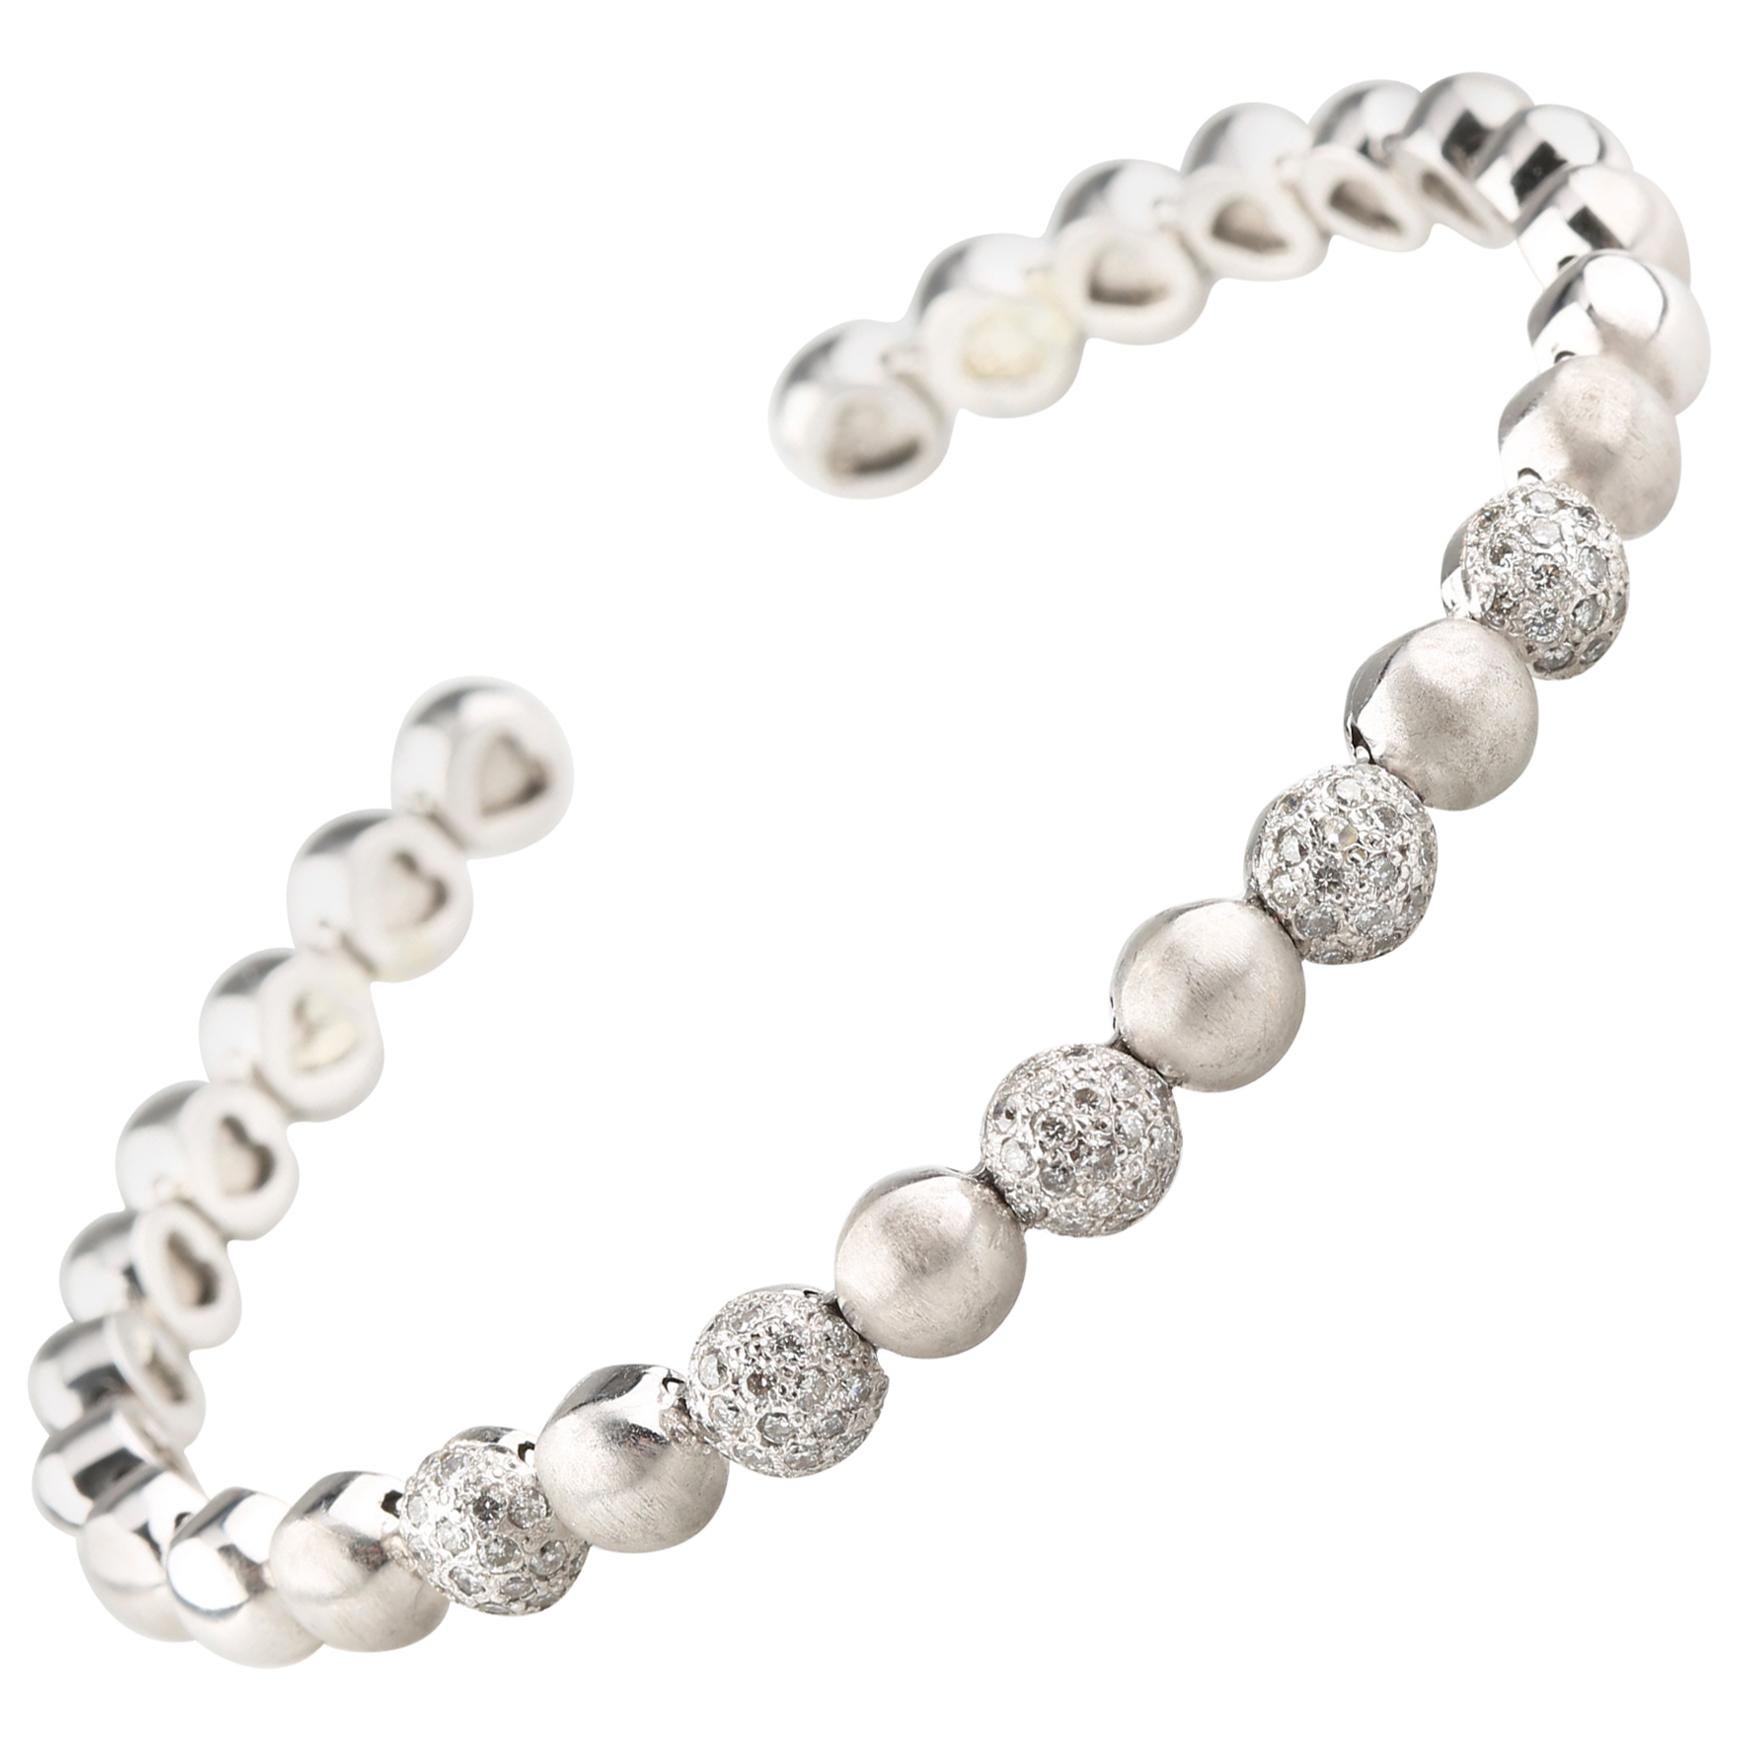 1.50 Carat Pave Diamond Cuff Bracelet Set in 14 Karat White Gold